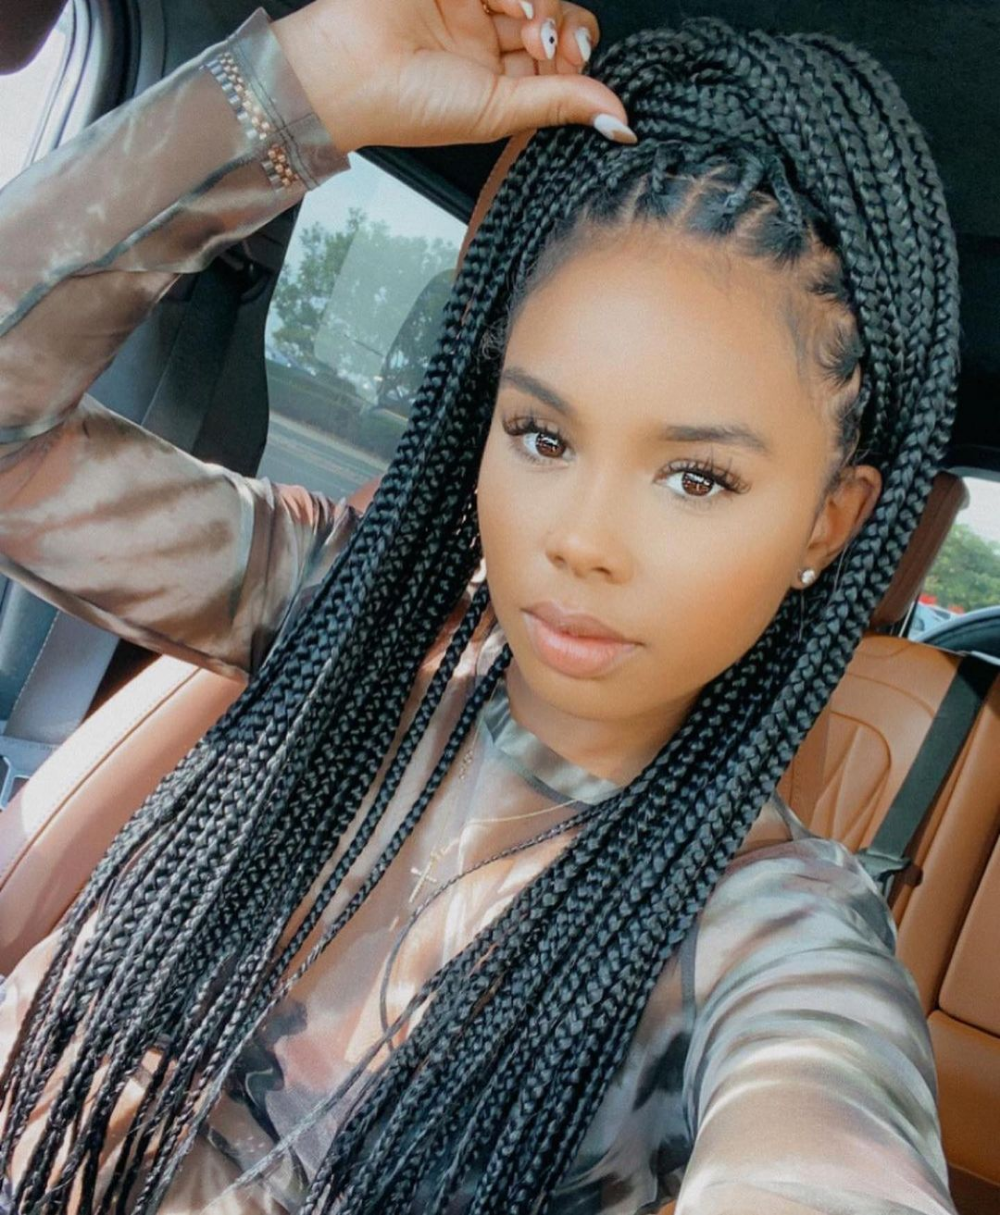 box braids hairstyles for black women